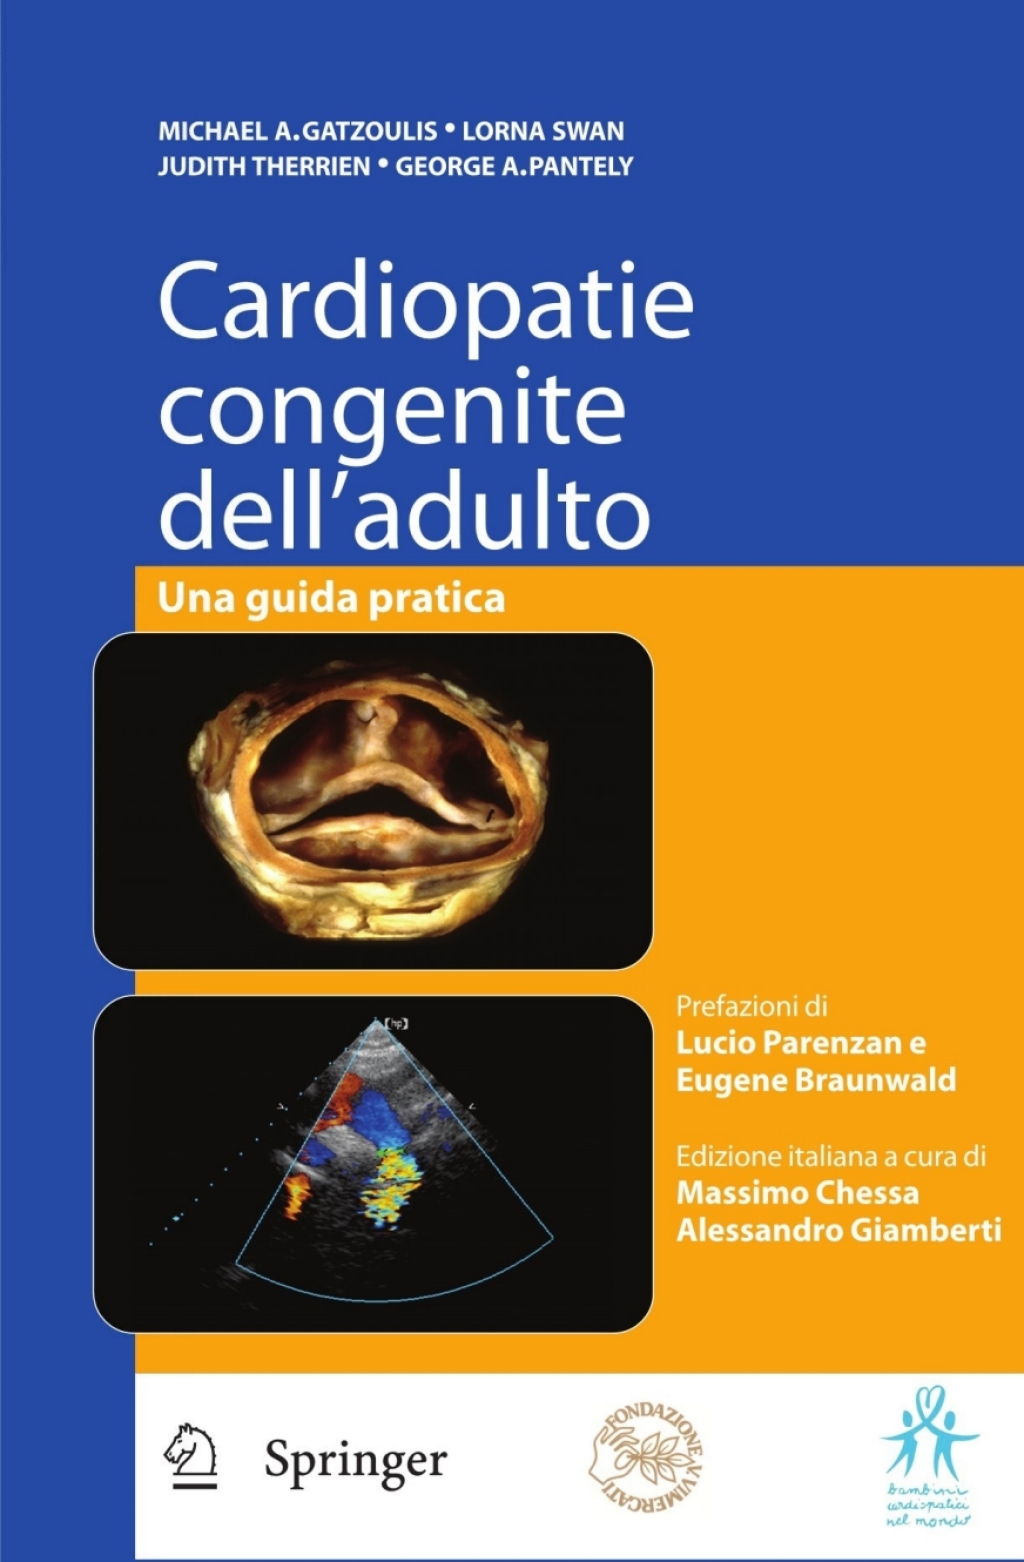 ISBN 9788847005259 product image for Cardiopatie congenite dell'adulto (eBook Rental) | upcitemdb.com